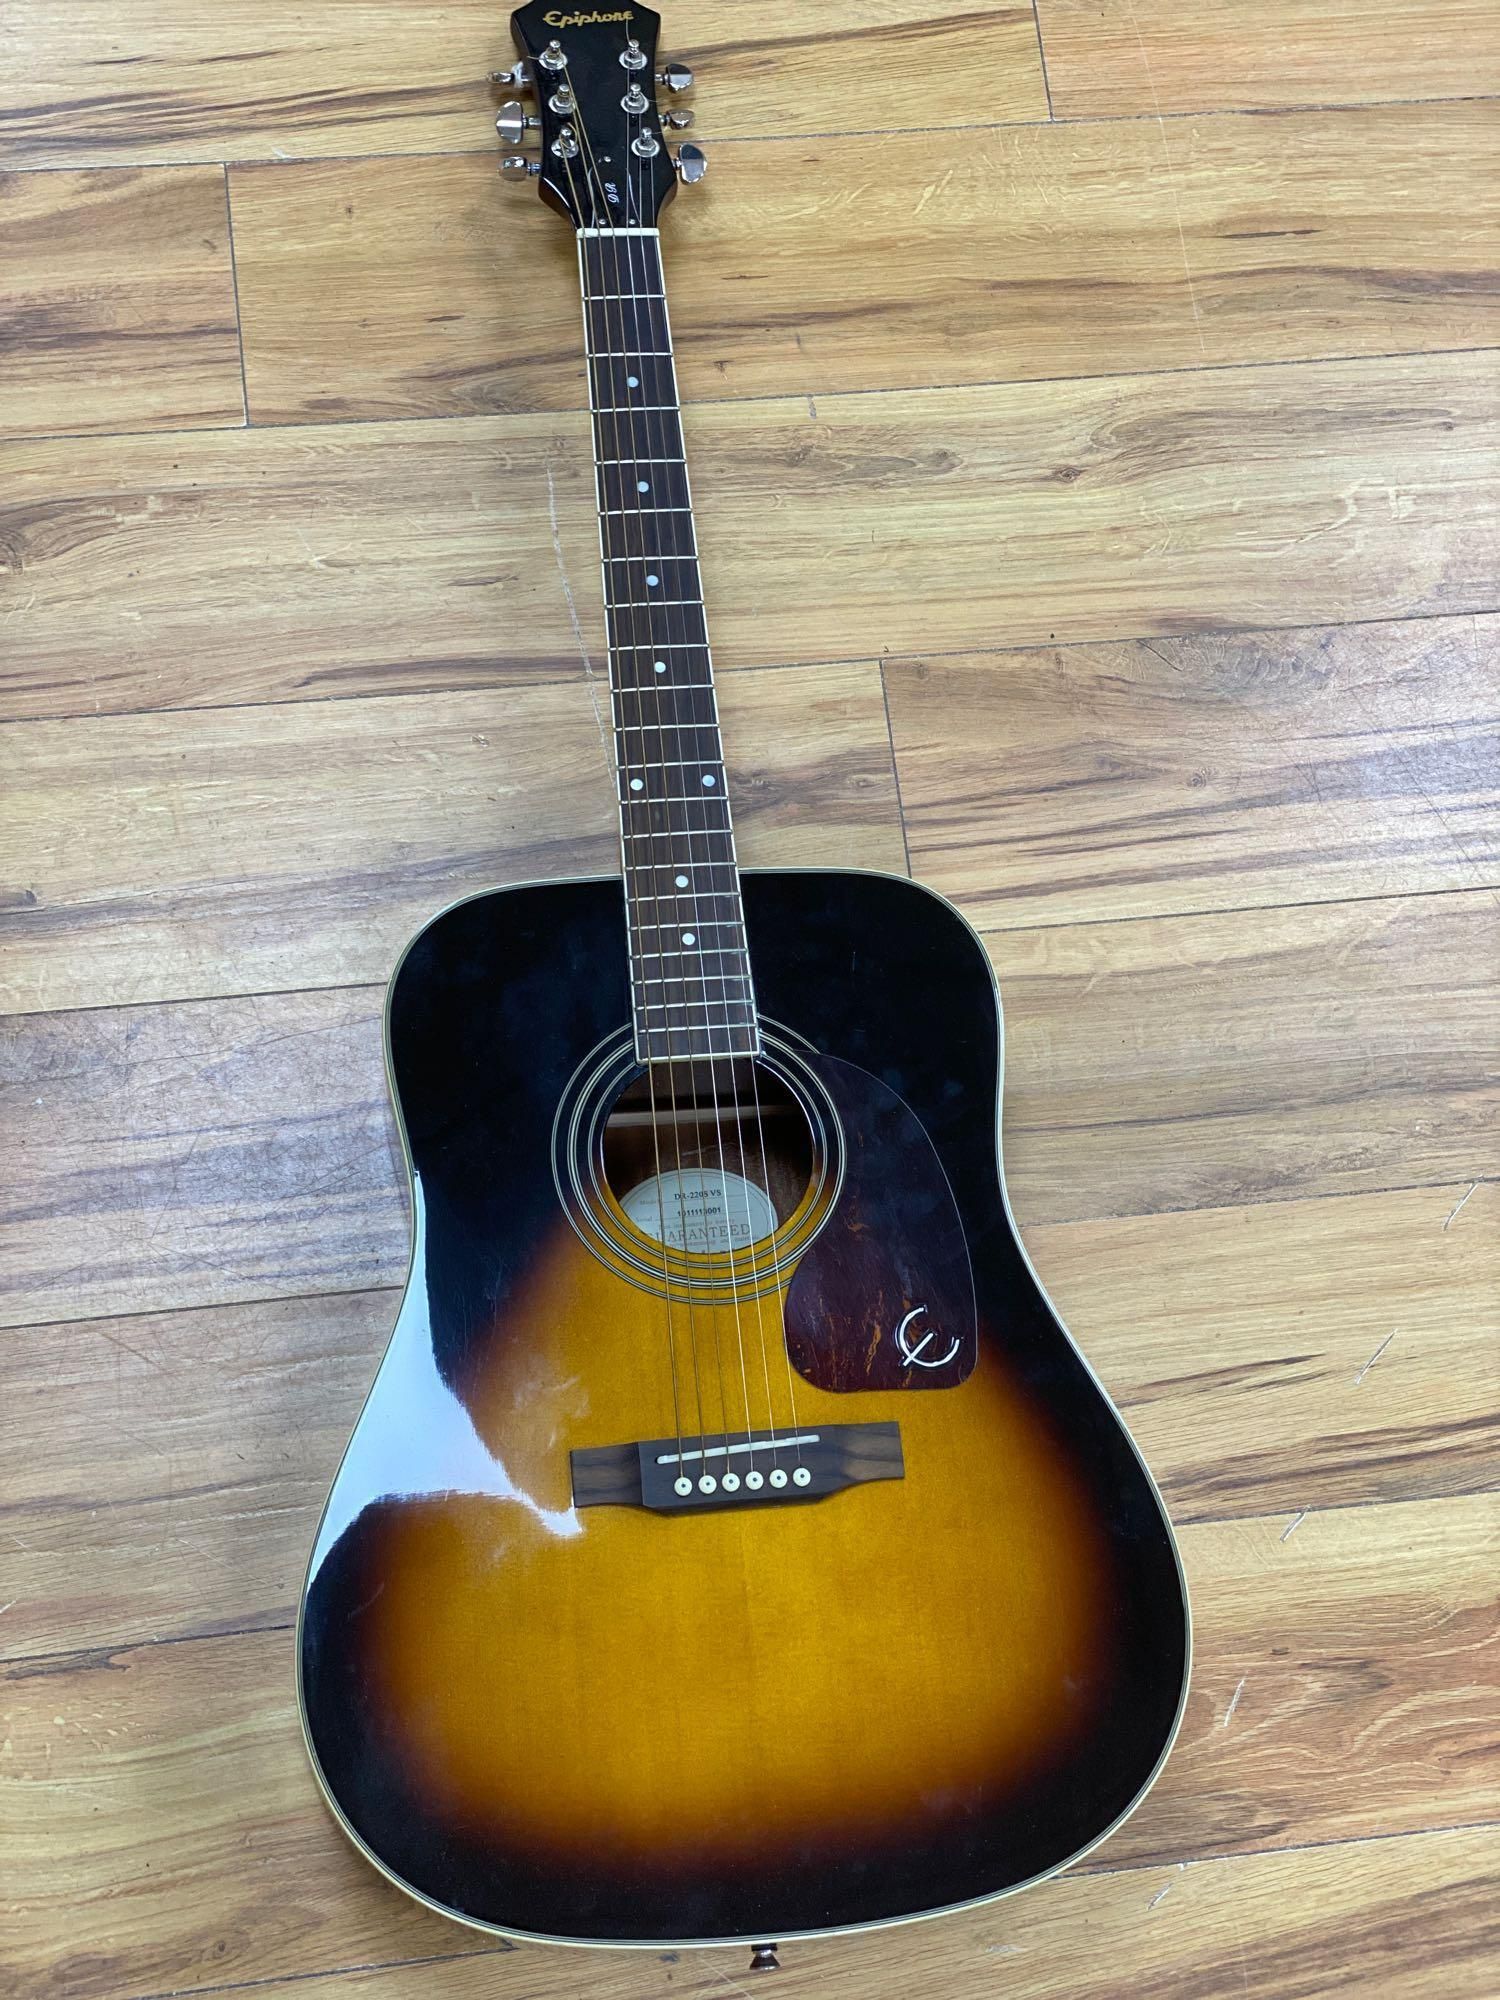 An Epiphone acoustic guitar, model DR-220SVS, in soft case